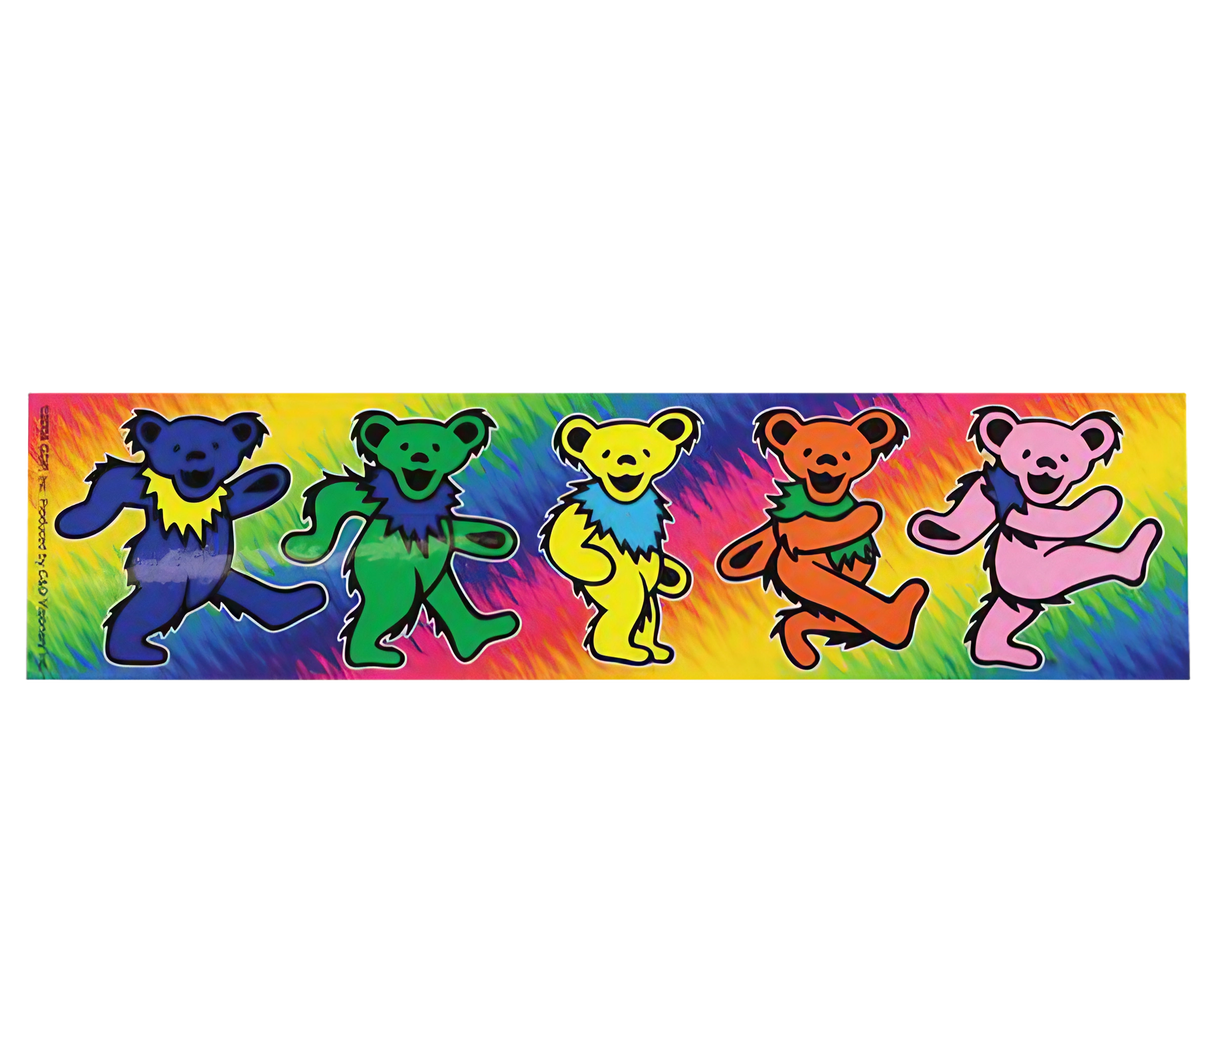 Grateful Dead Dancing Bear Bumper Sticker, 2"x8", vibrant tie-dye background, front view